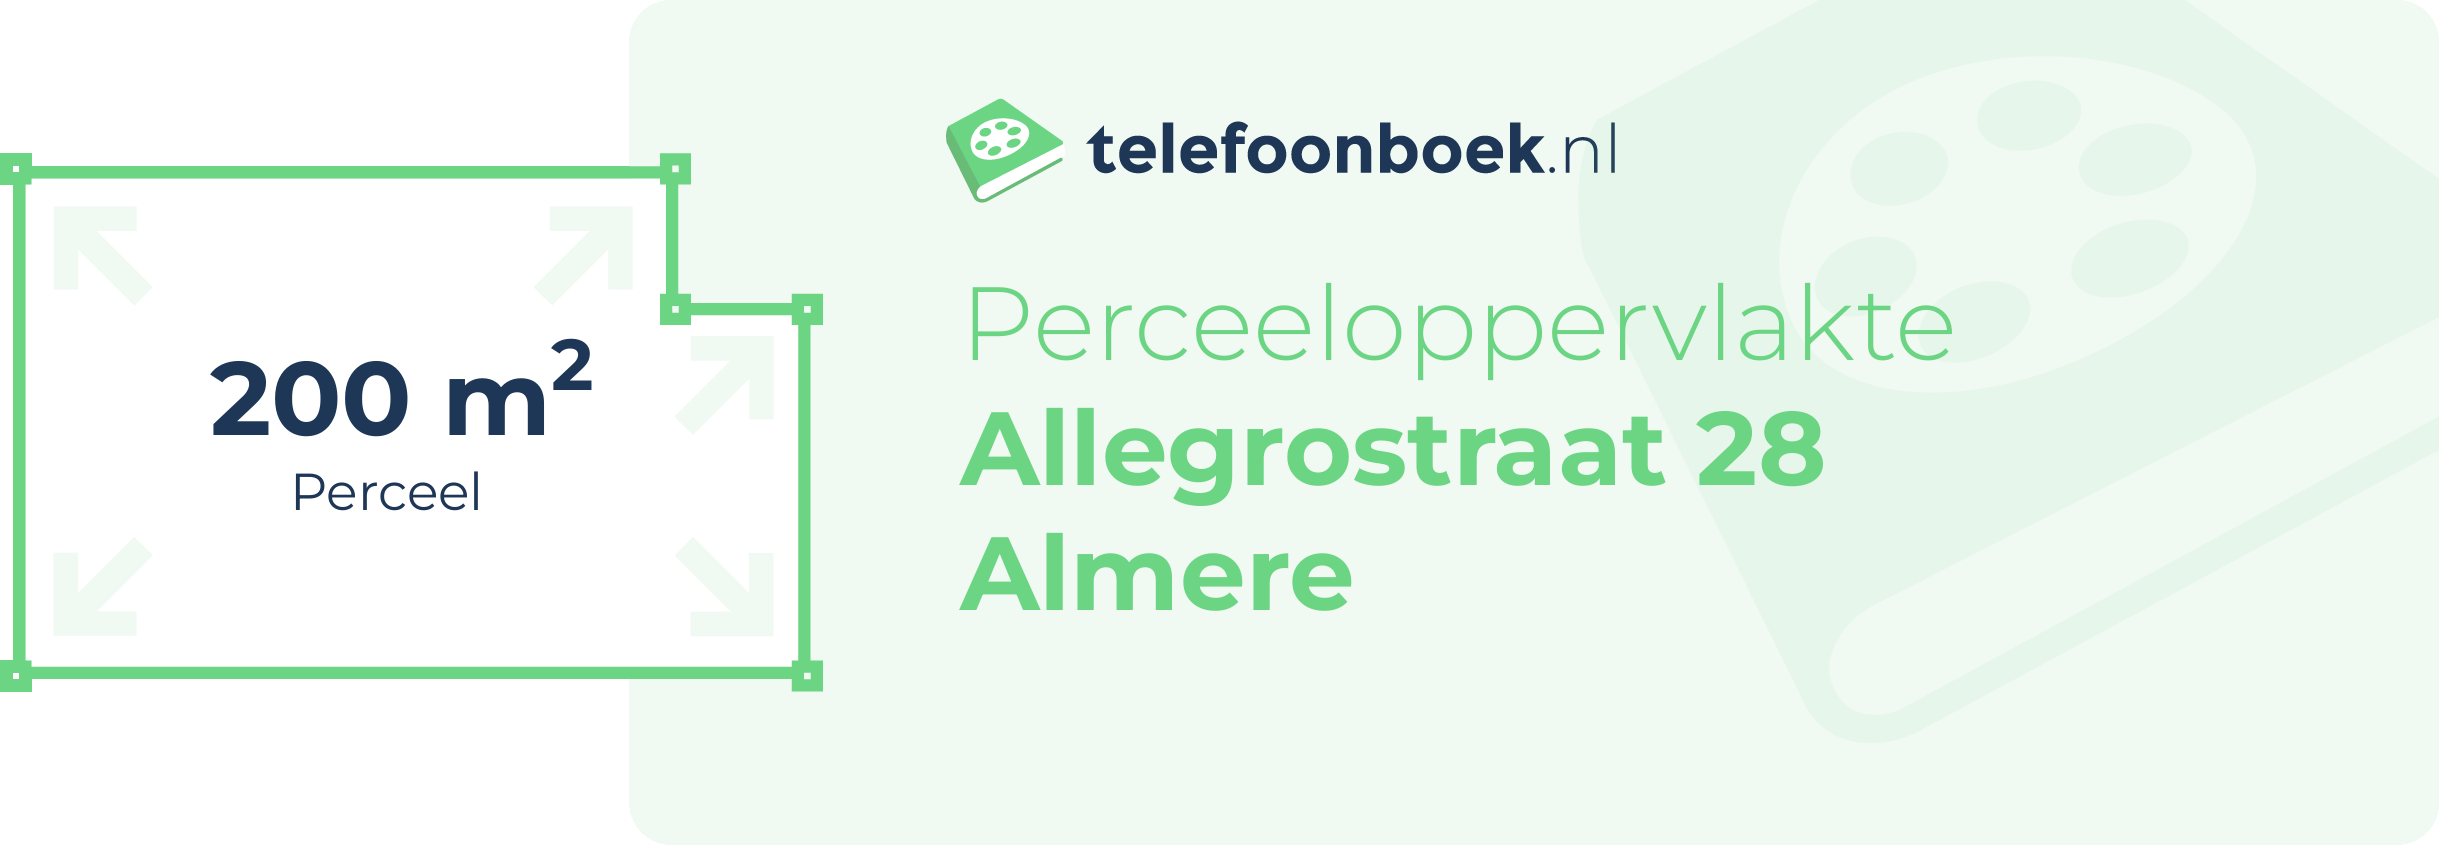 Perceeloppervlakte Allegrostraat 28 Almere